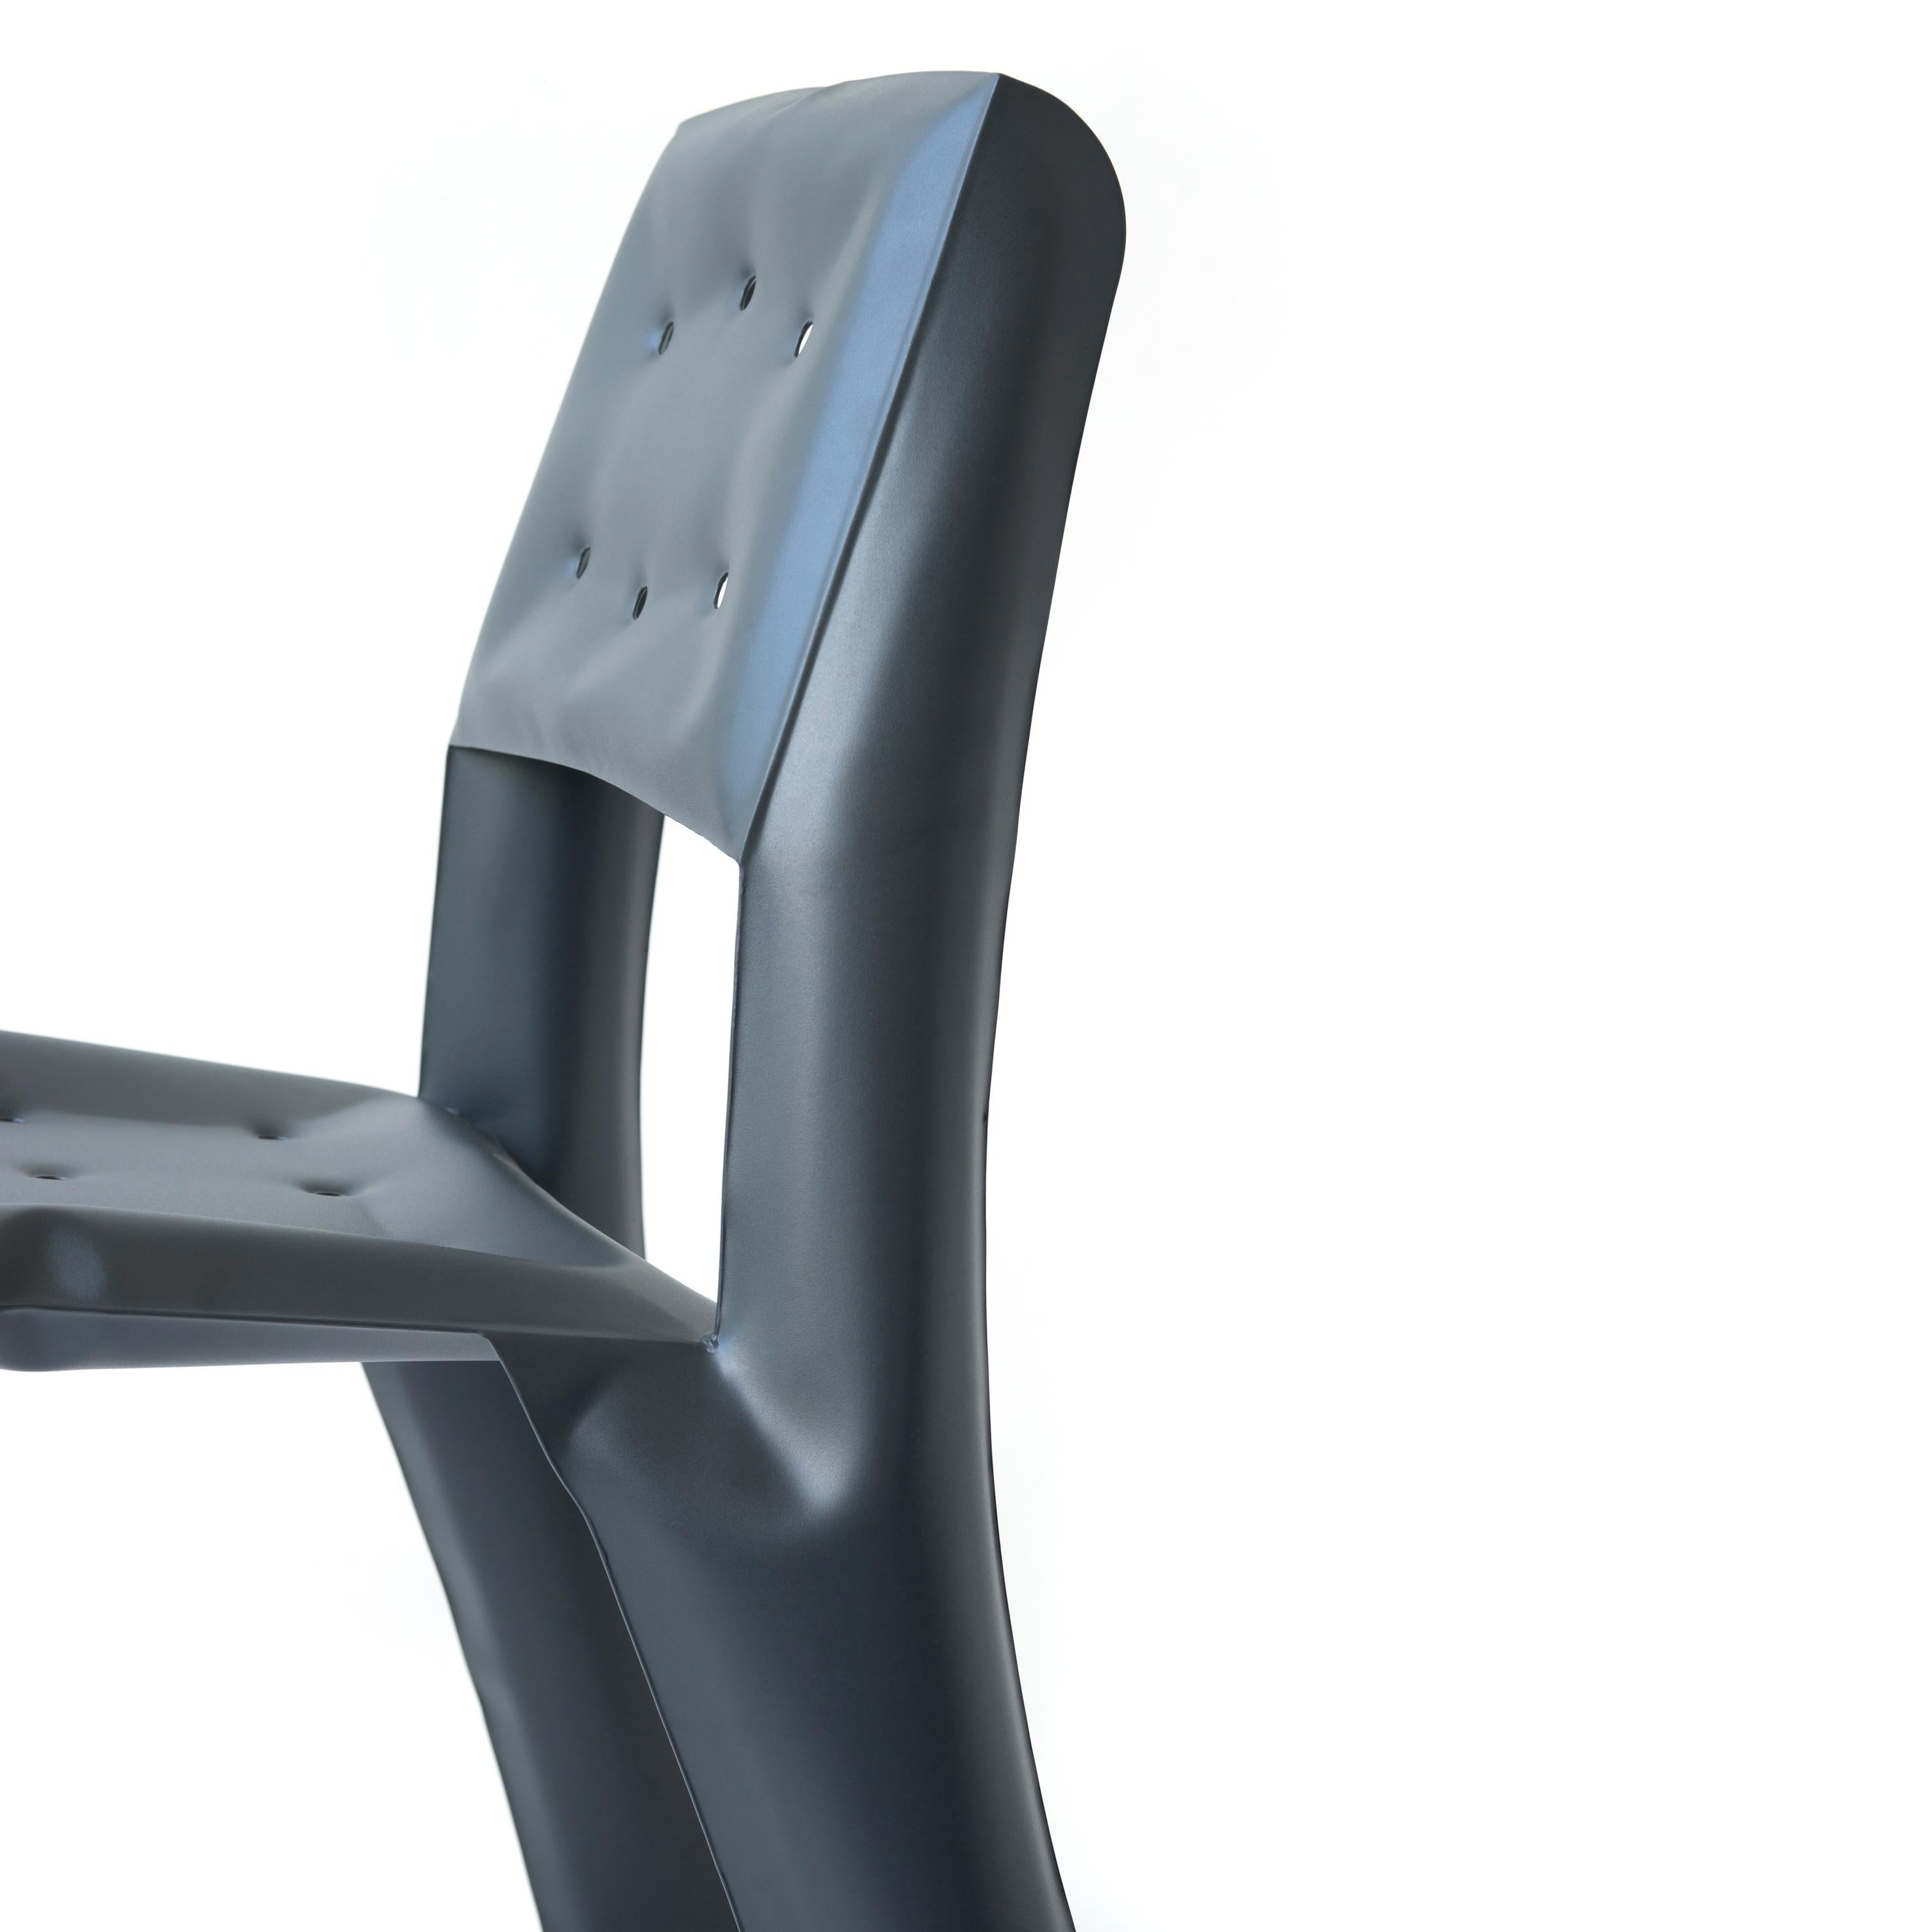 Graphite Carbon Steel Chippensteel 0.5 Sculptural Chair by Zieta For Sale 1